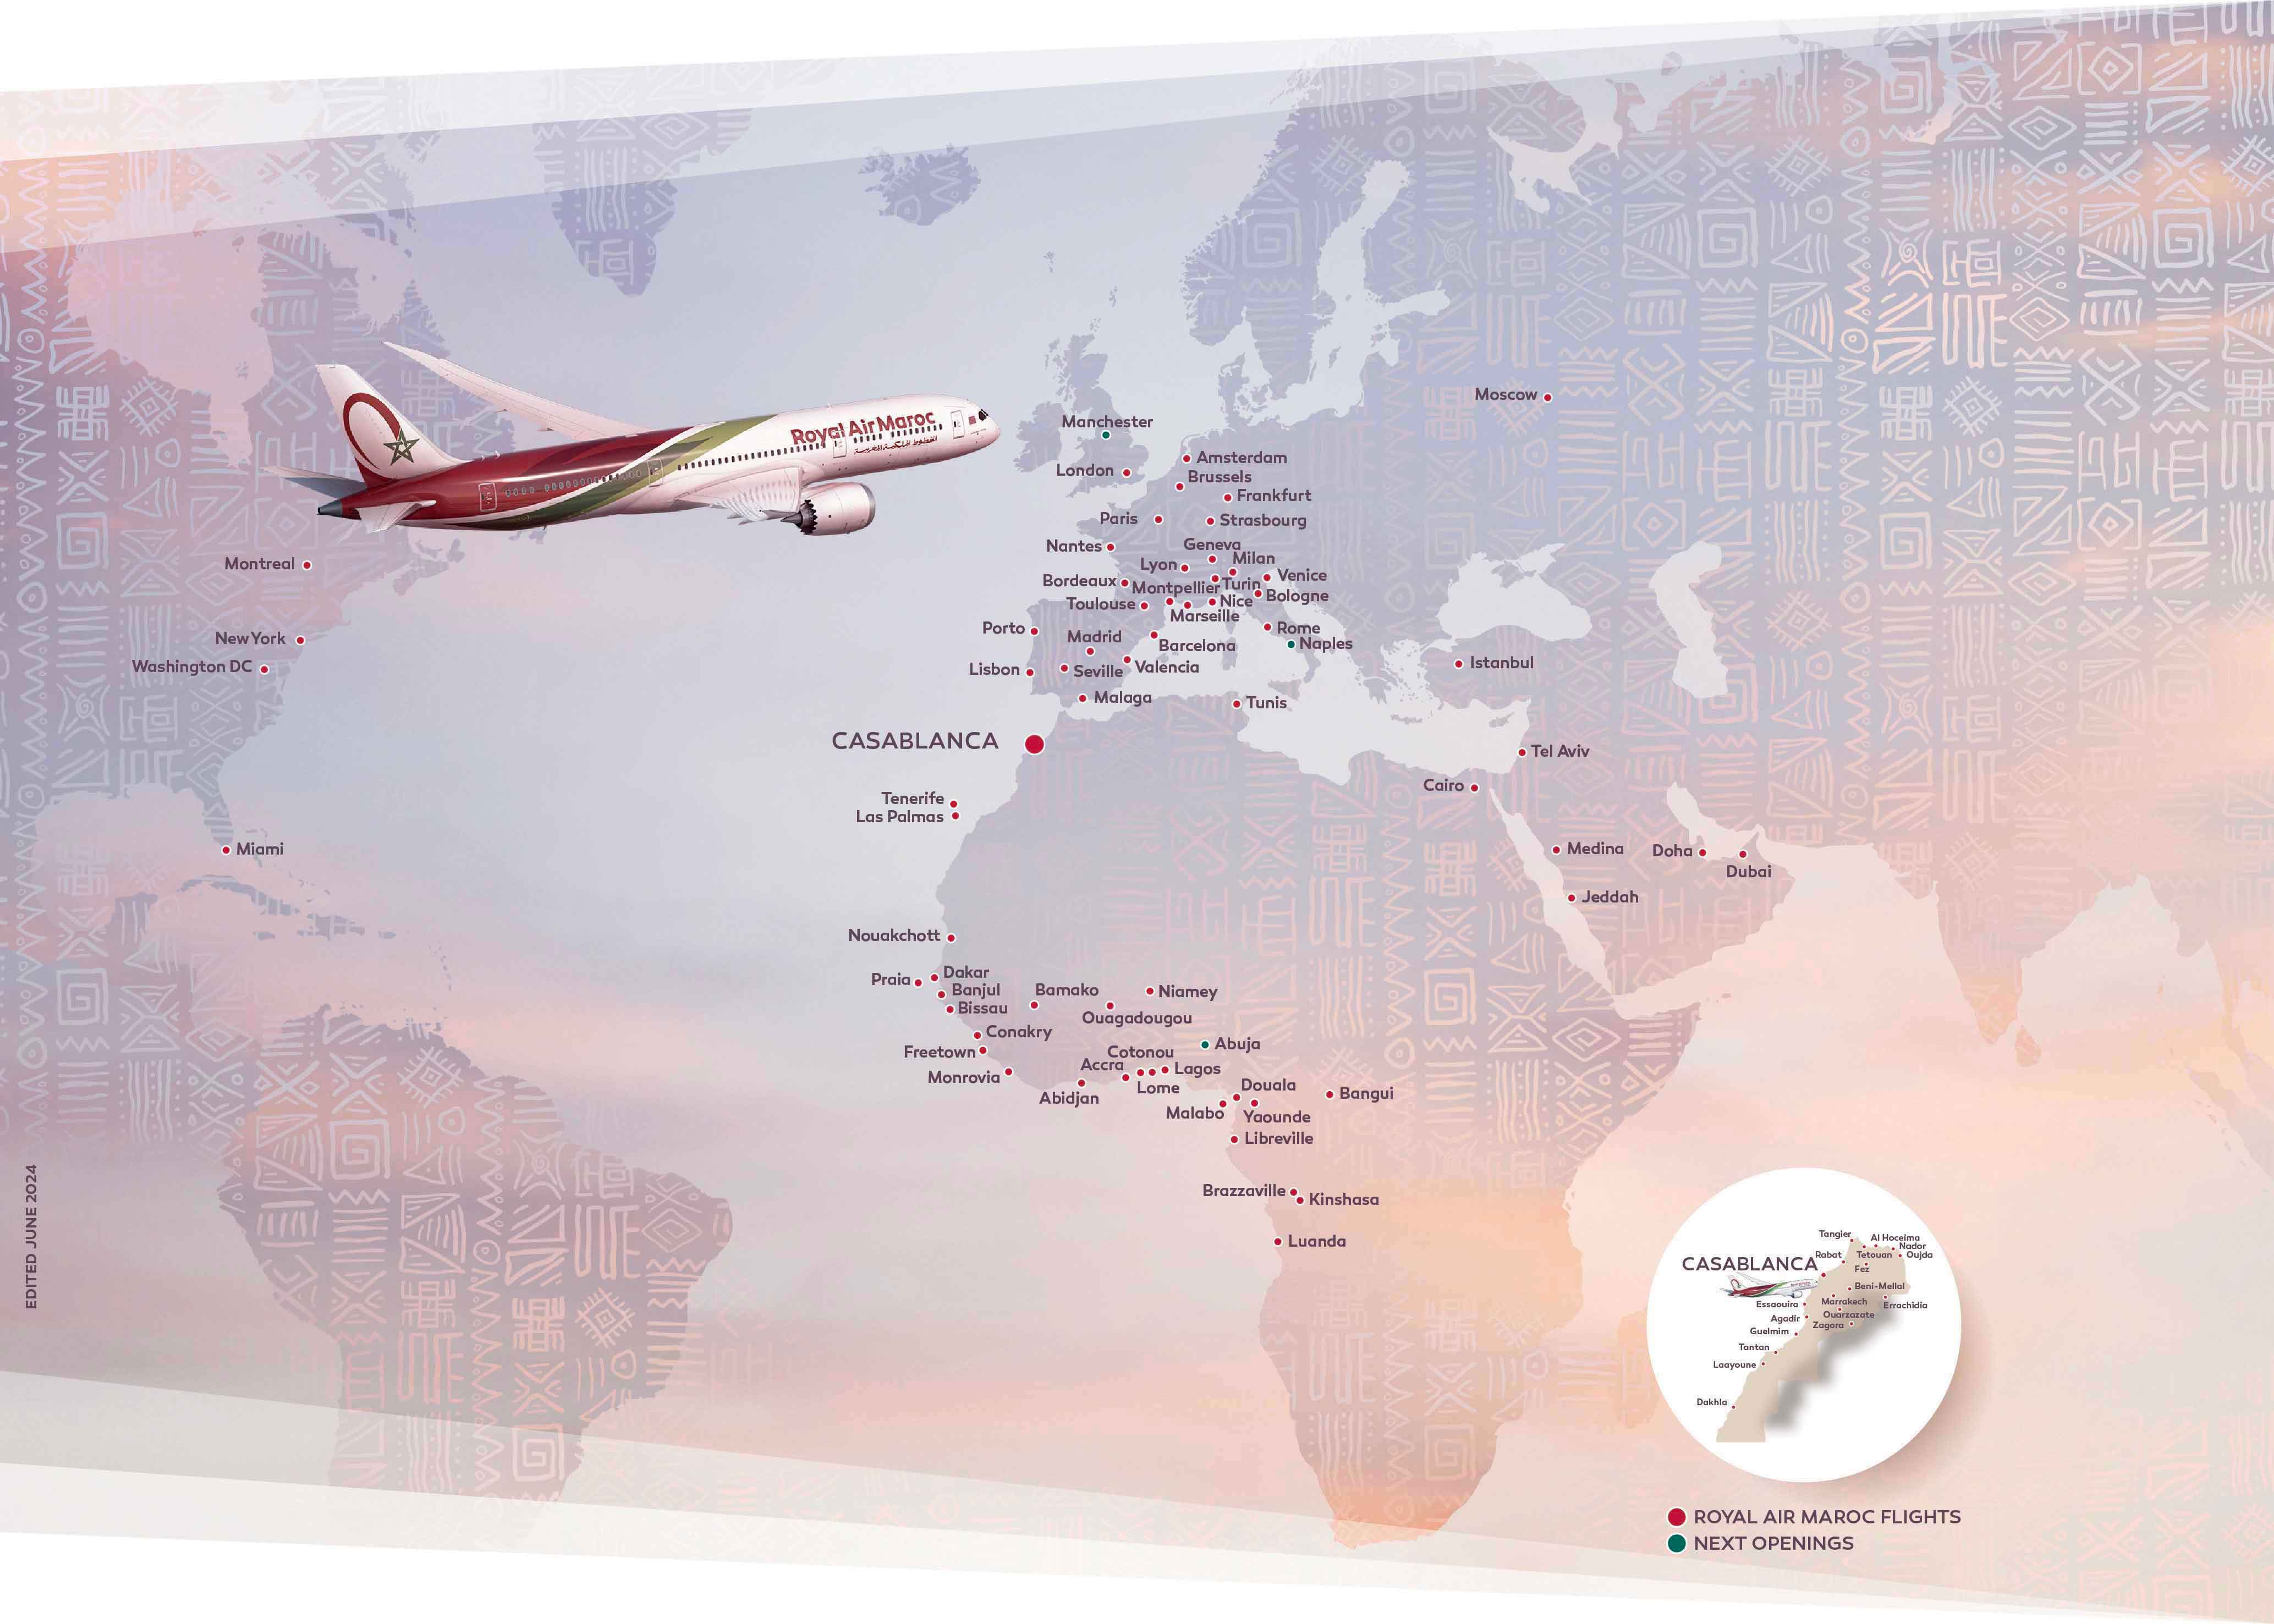 RAM Network Map. RAM has flights from Casablanca to the following destinations: Montreal, New York, Washington, Miami, Sao Paulo, Rio de Janeiro, Europe and Africa